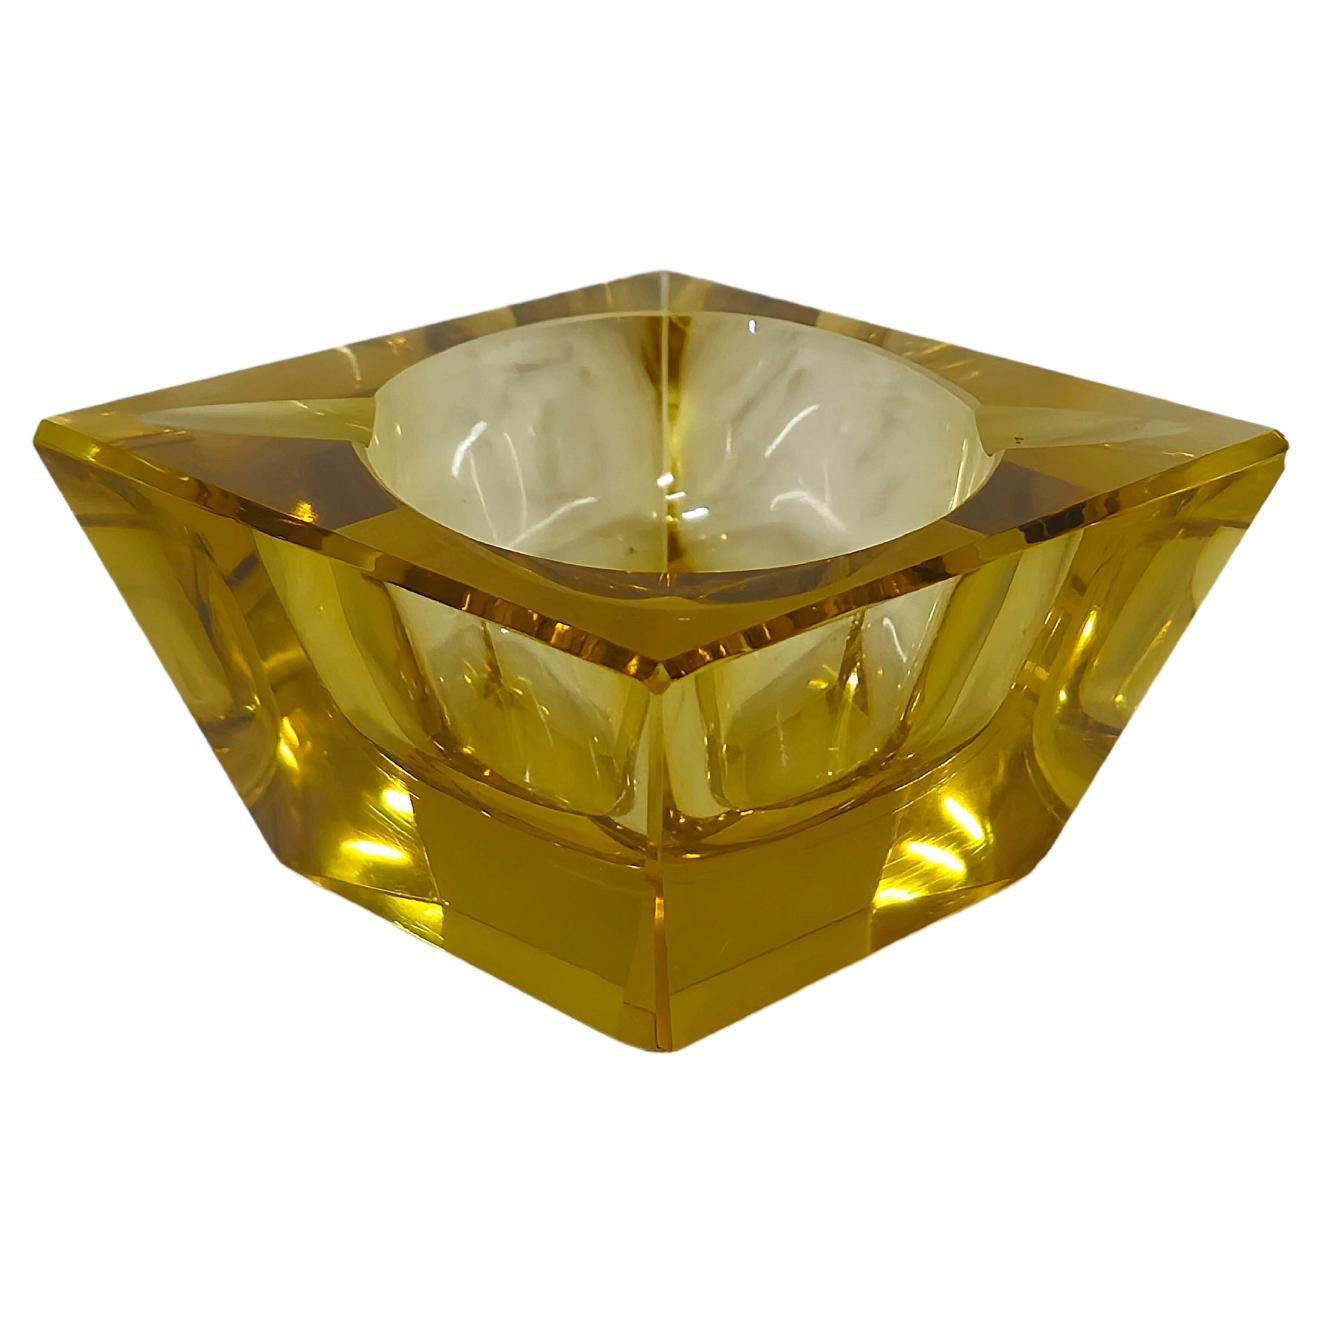 Ashtray Flavio Poli Murano Glass Midcentury Modern Italian Design 1960s For Sale